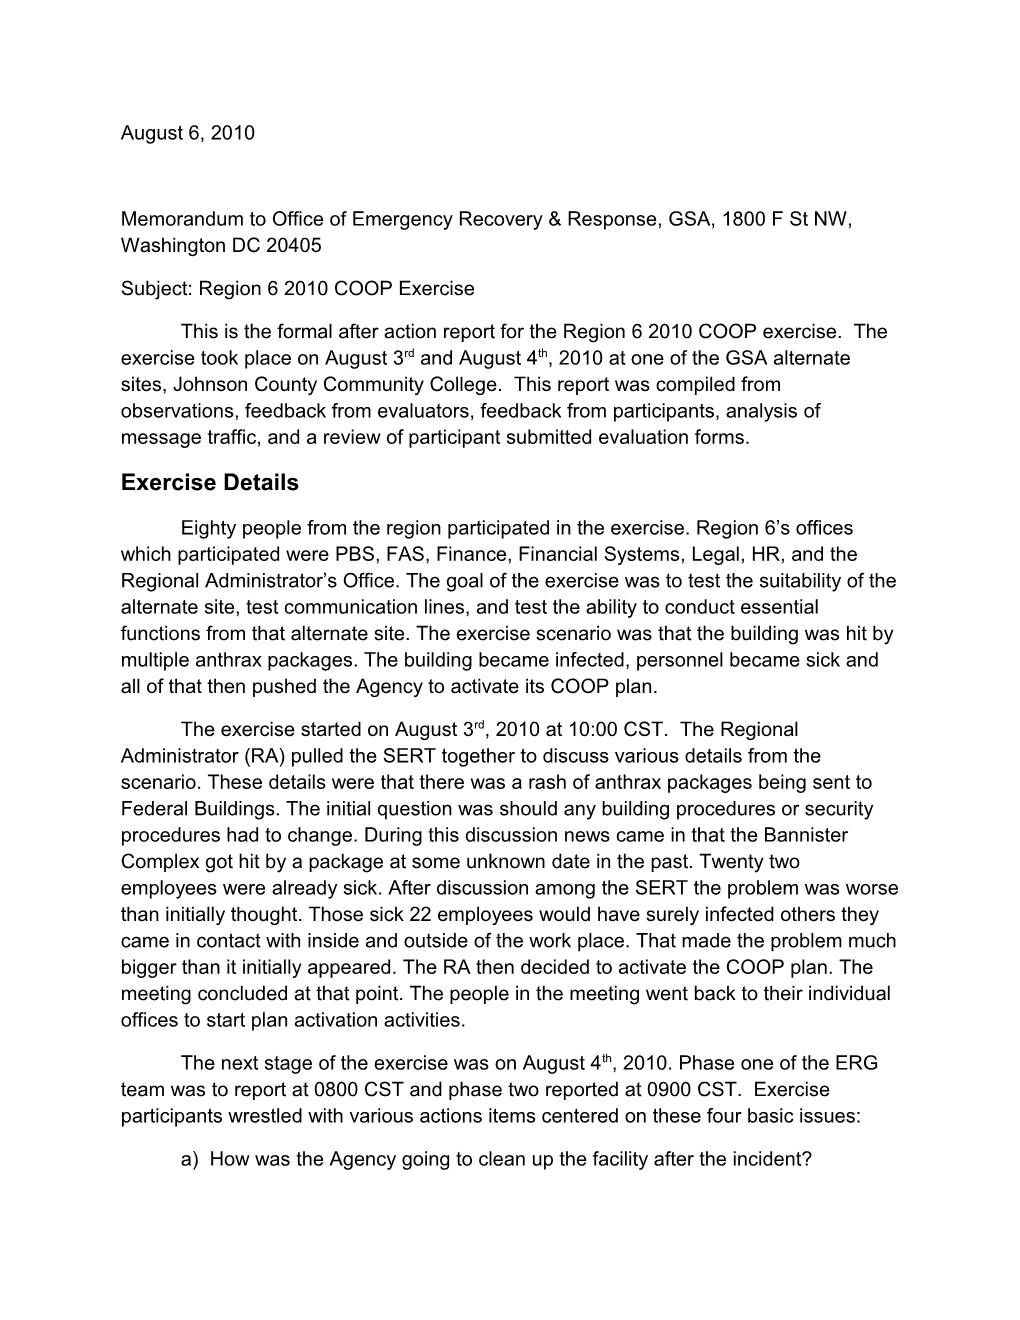 Memorandum to Office of Emergency Recovery & Response, GSA, 1800 F St NW, Washington DC 20405